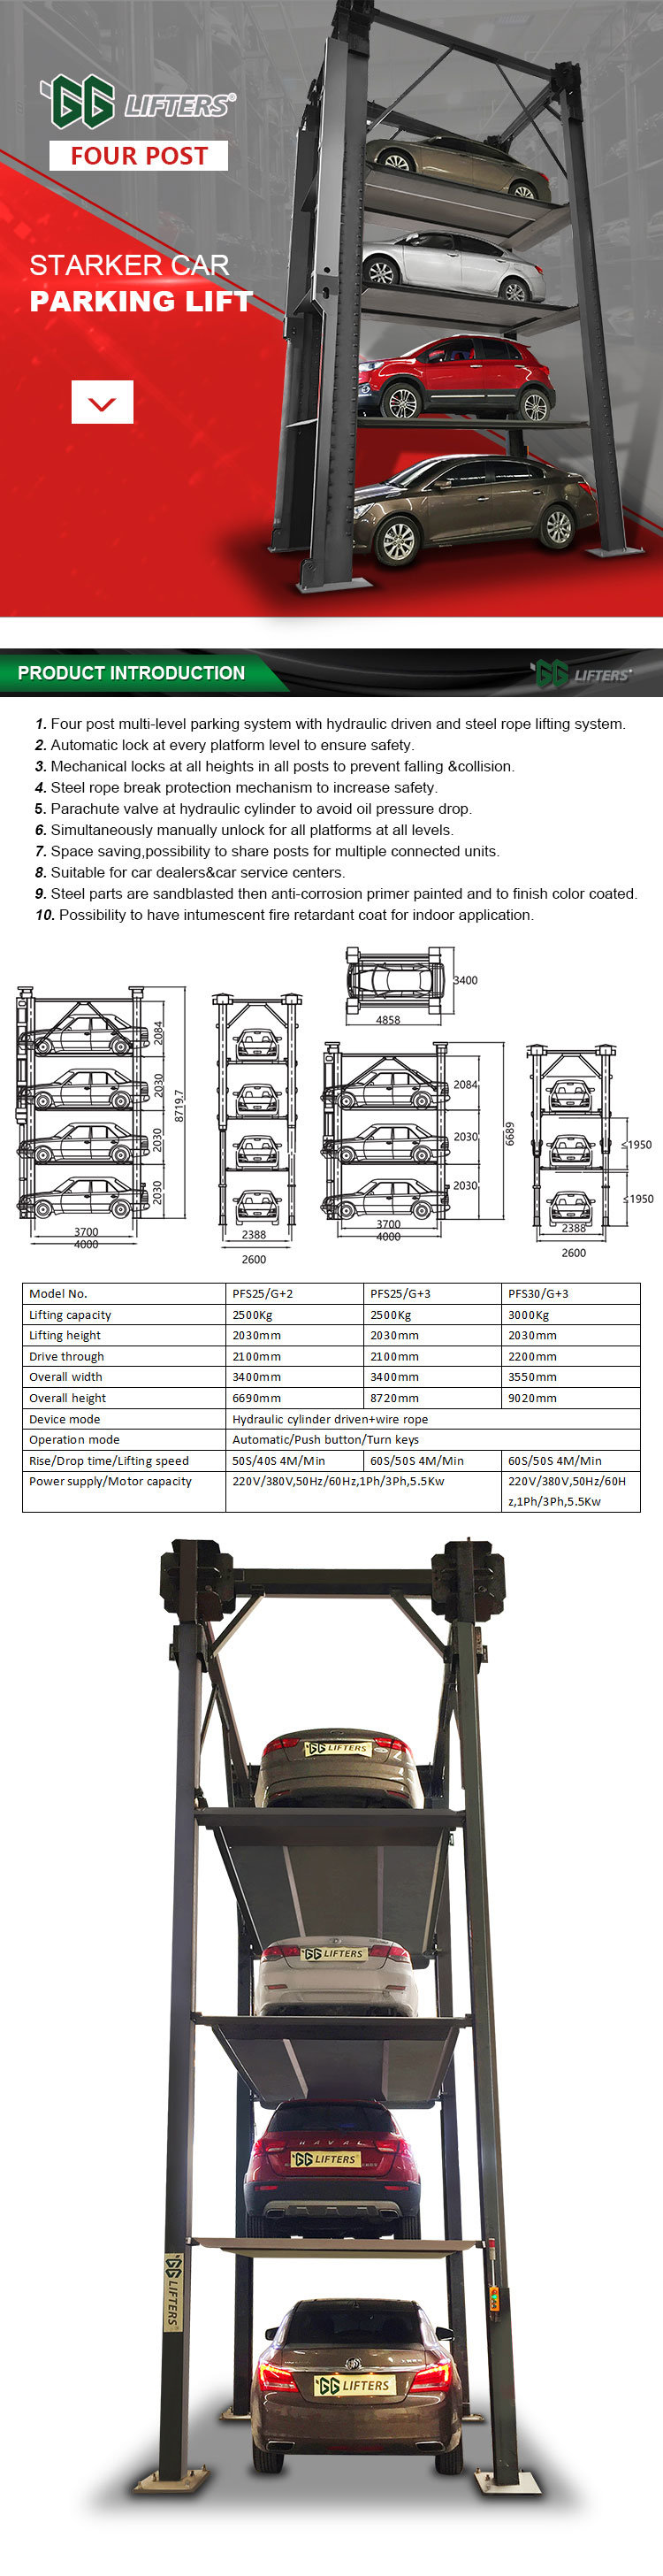 GG Lifters 3 Level Car Vehicle Elevator Platform Triple Stacker Parking Lift